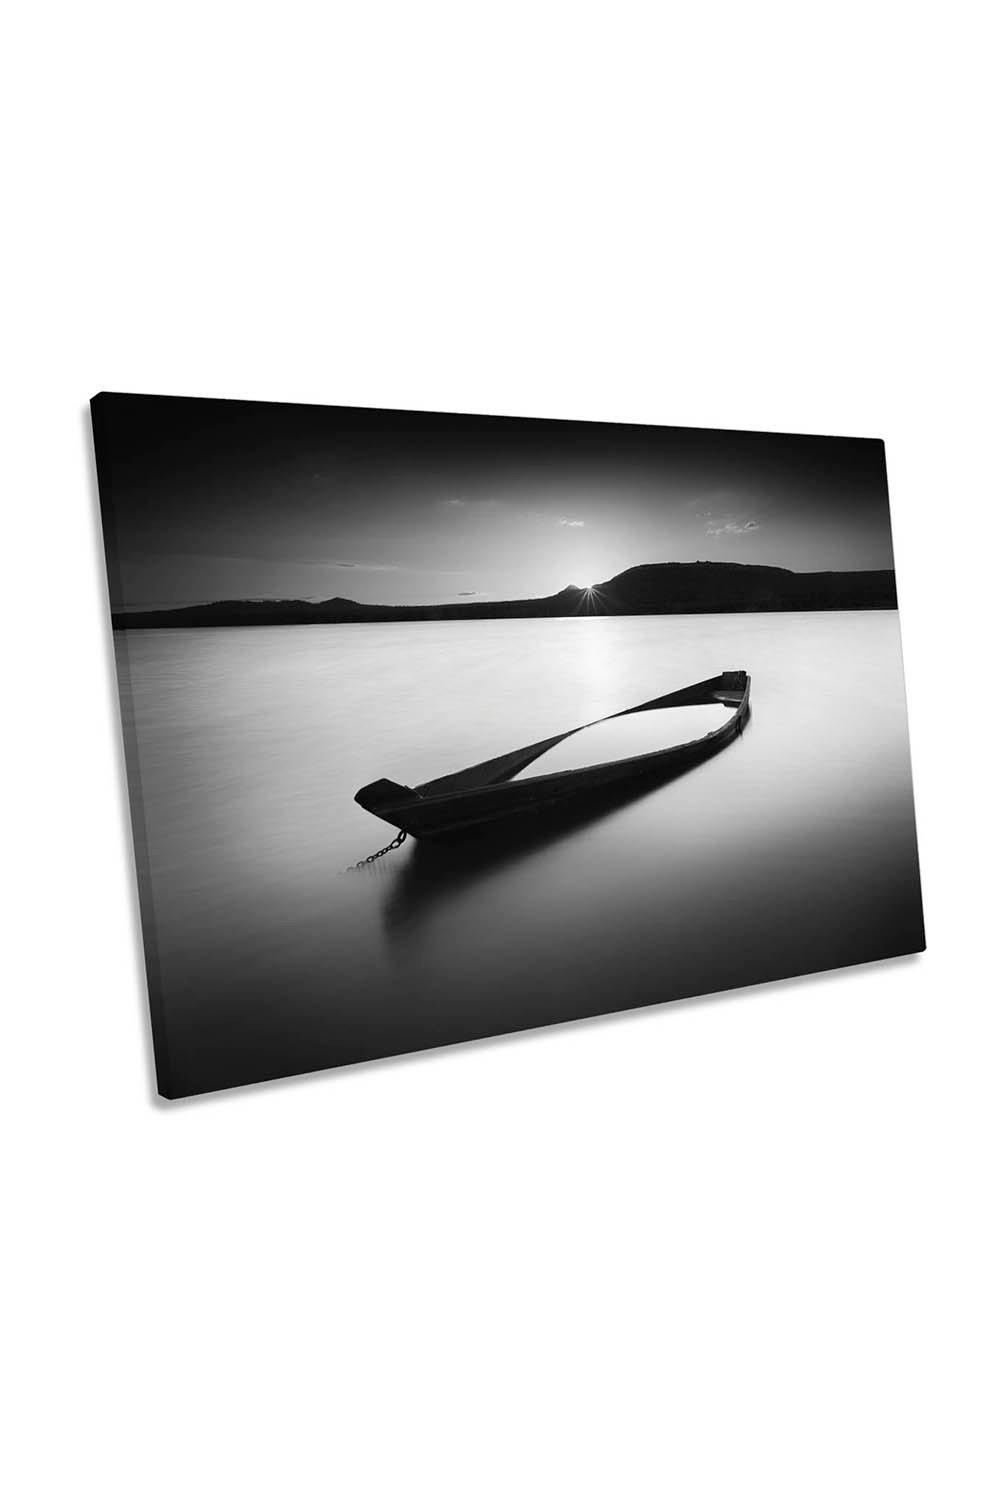 Zuratkul-Zen Lake Boat Sunset Black and White Canvas Wall Art Picture Print